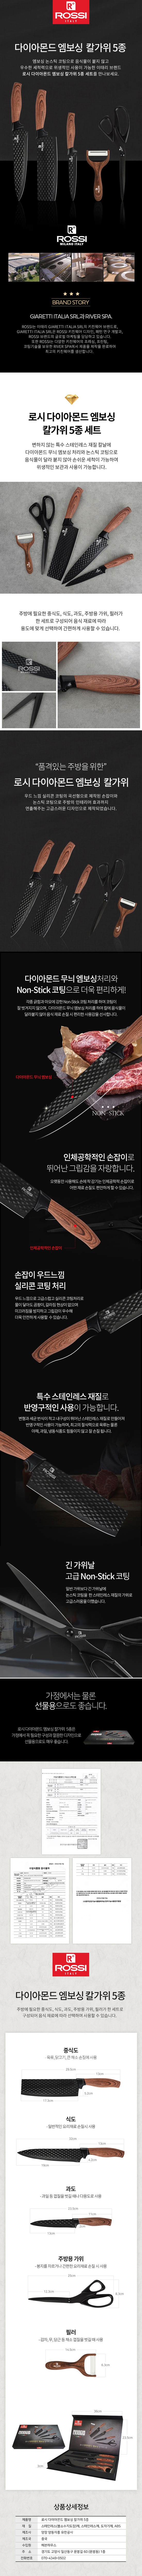 rossi-knife5set_detail.jpg